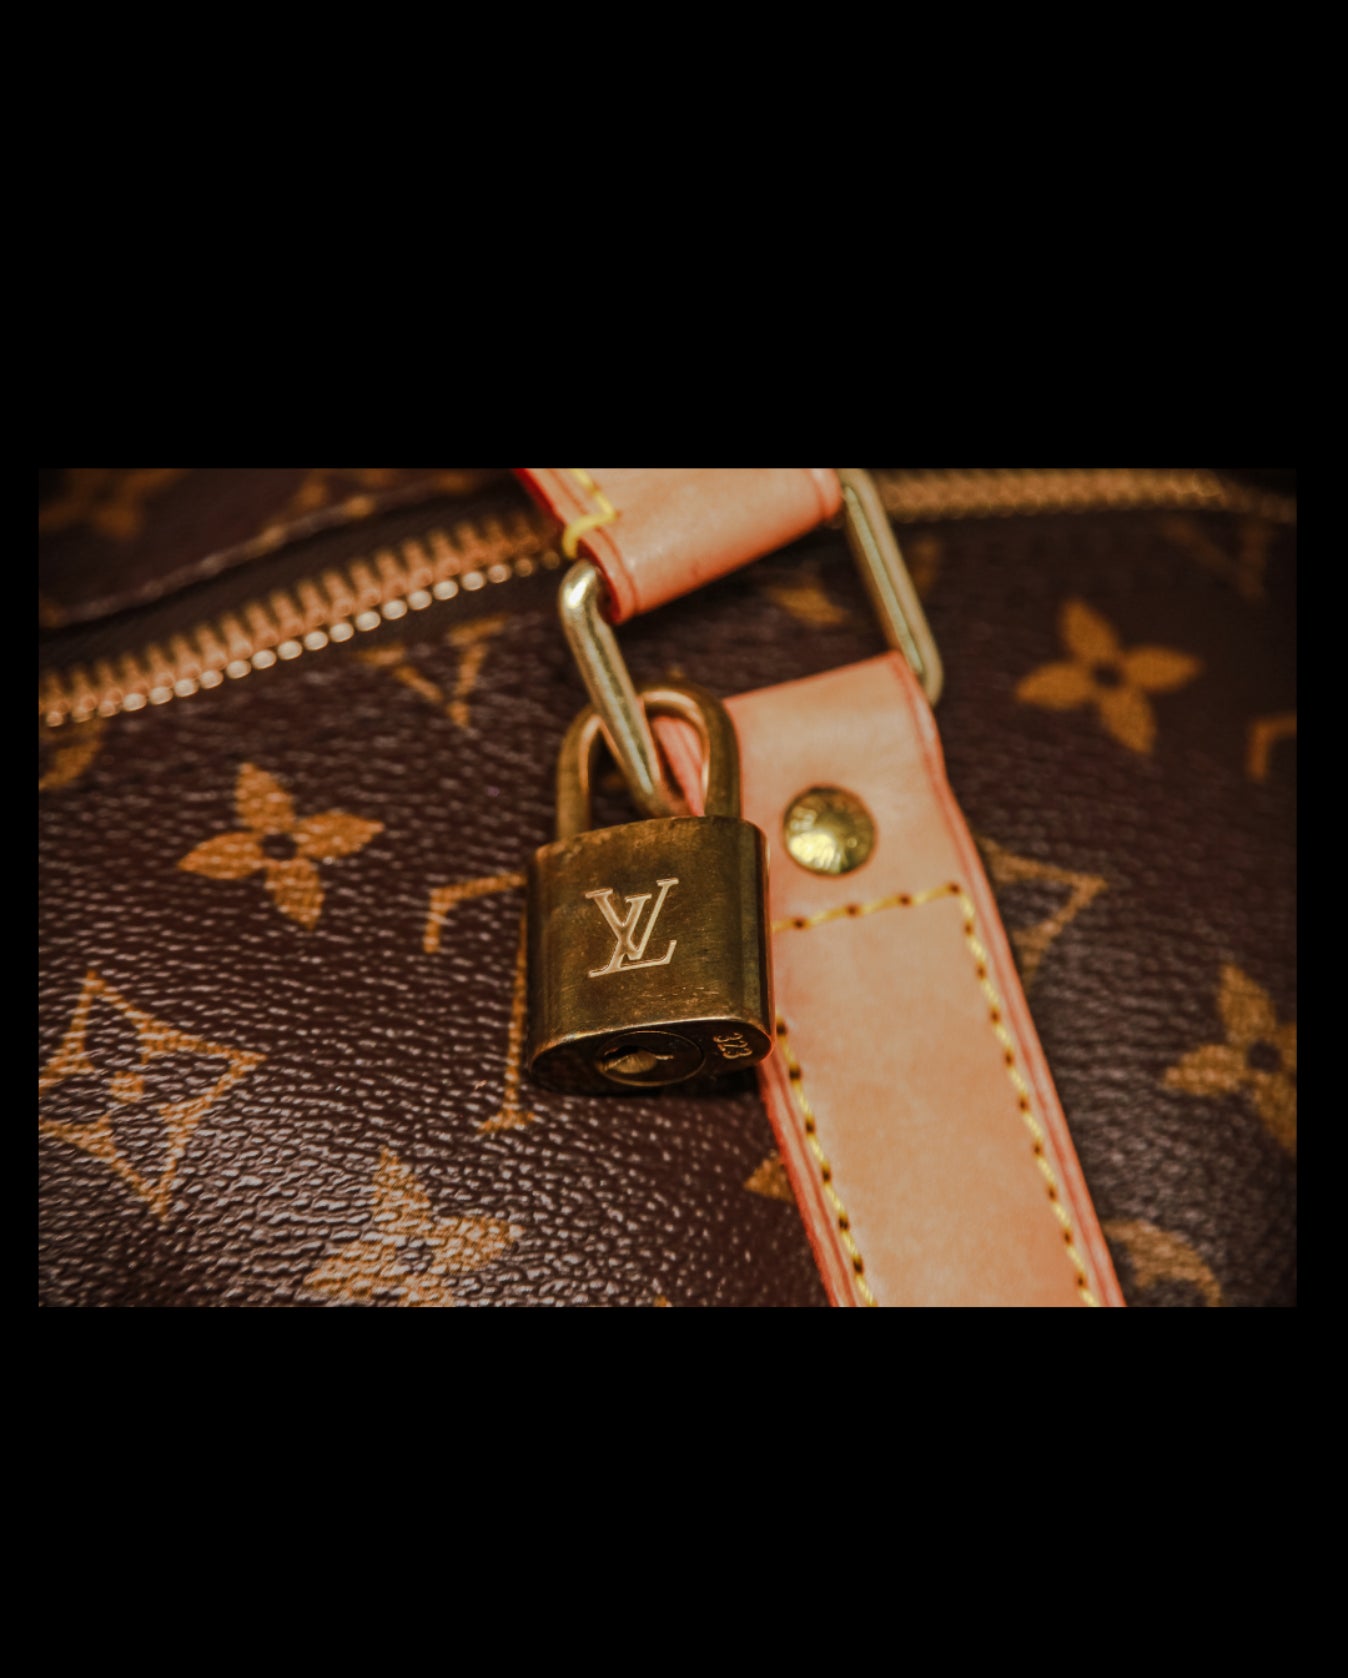 Found by Fred Segal Women's Louis Vuitton Pochette Accessoires Bag